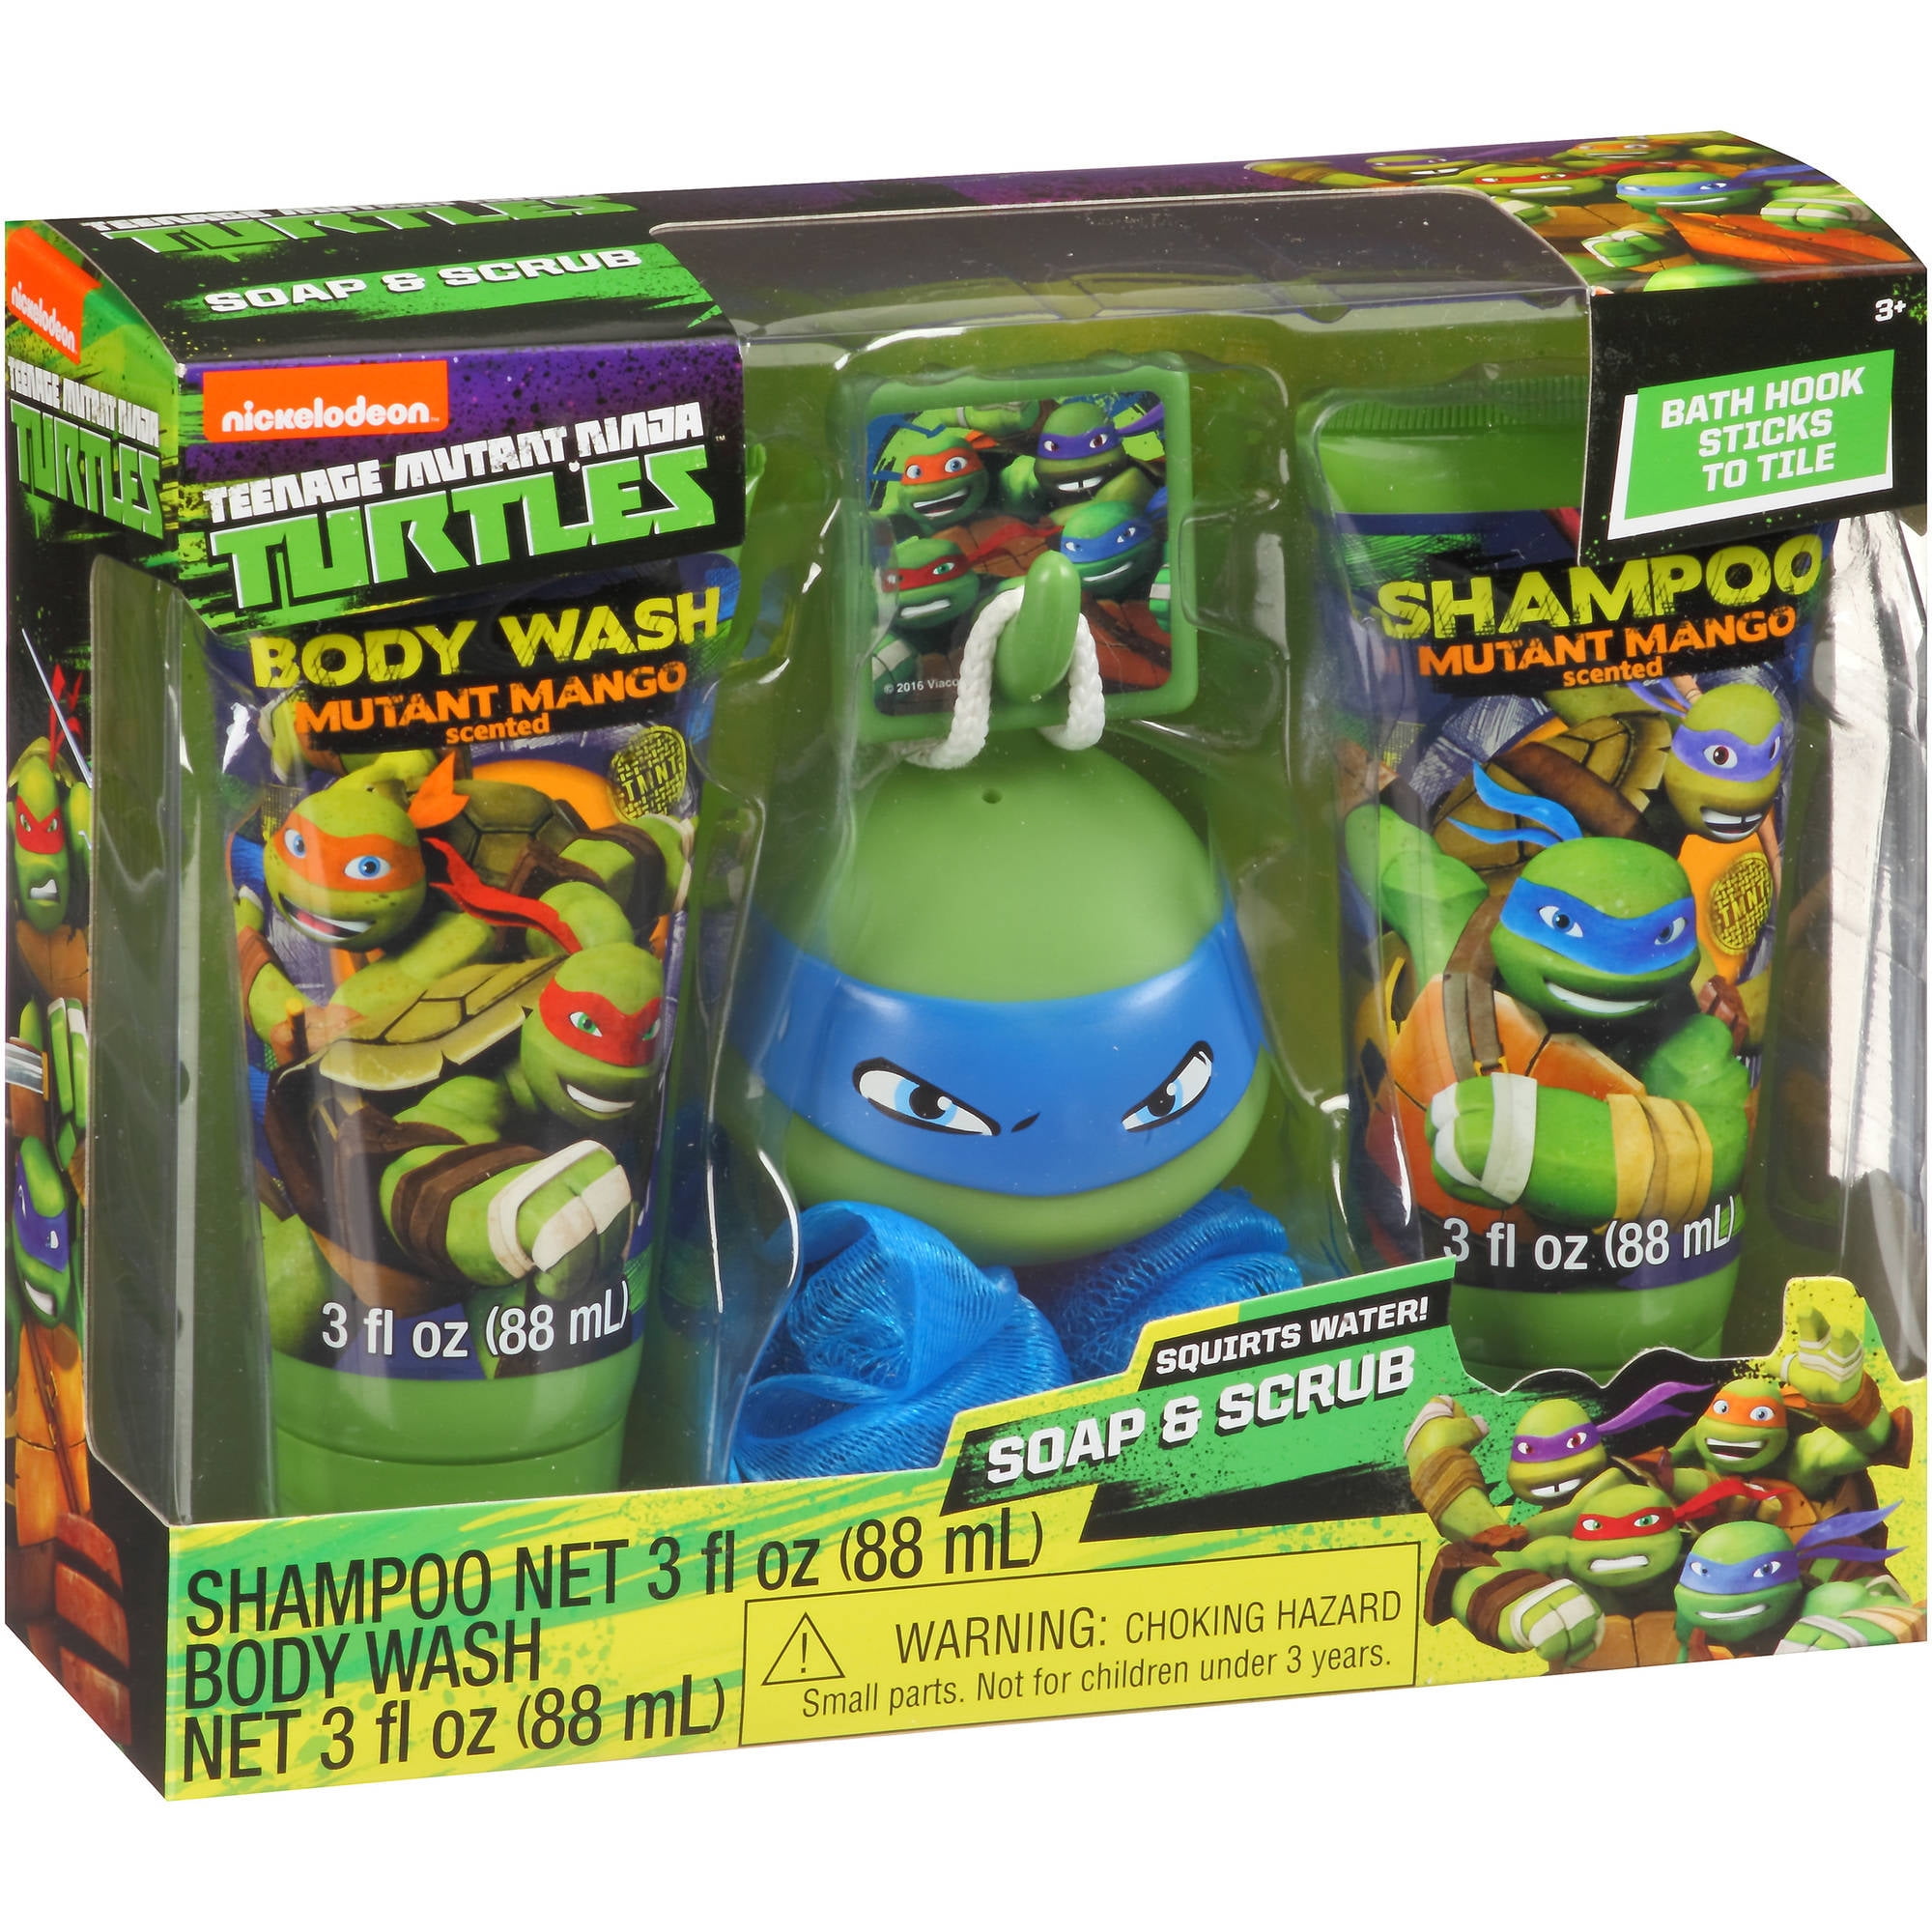 Shampoo Bath Sc.. Body Wash Teenage Mutant Ninja Turtles 4 Piece Soap & Scrub 